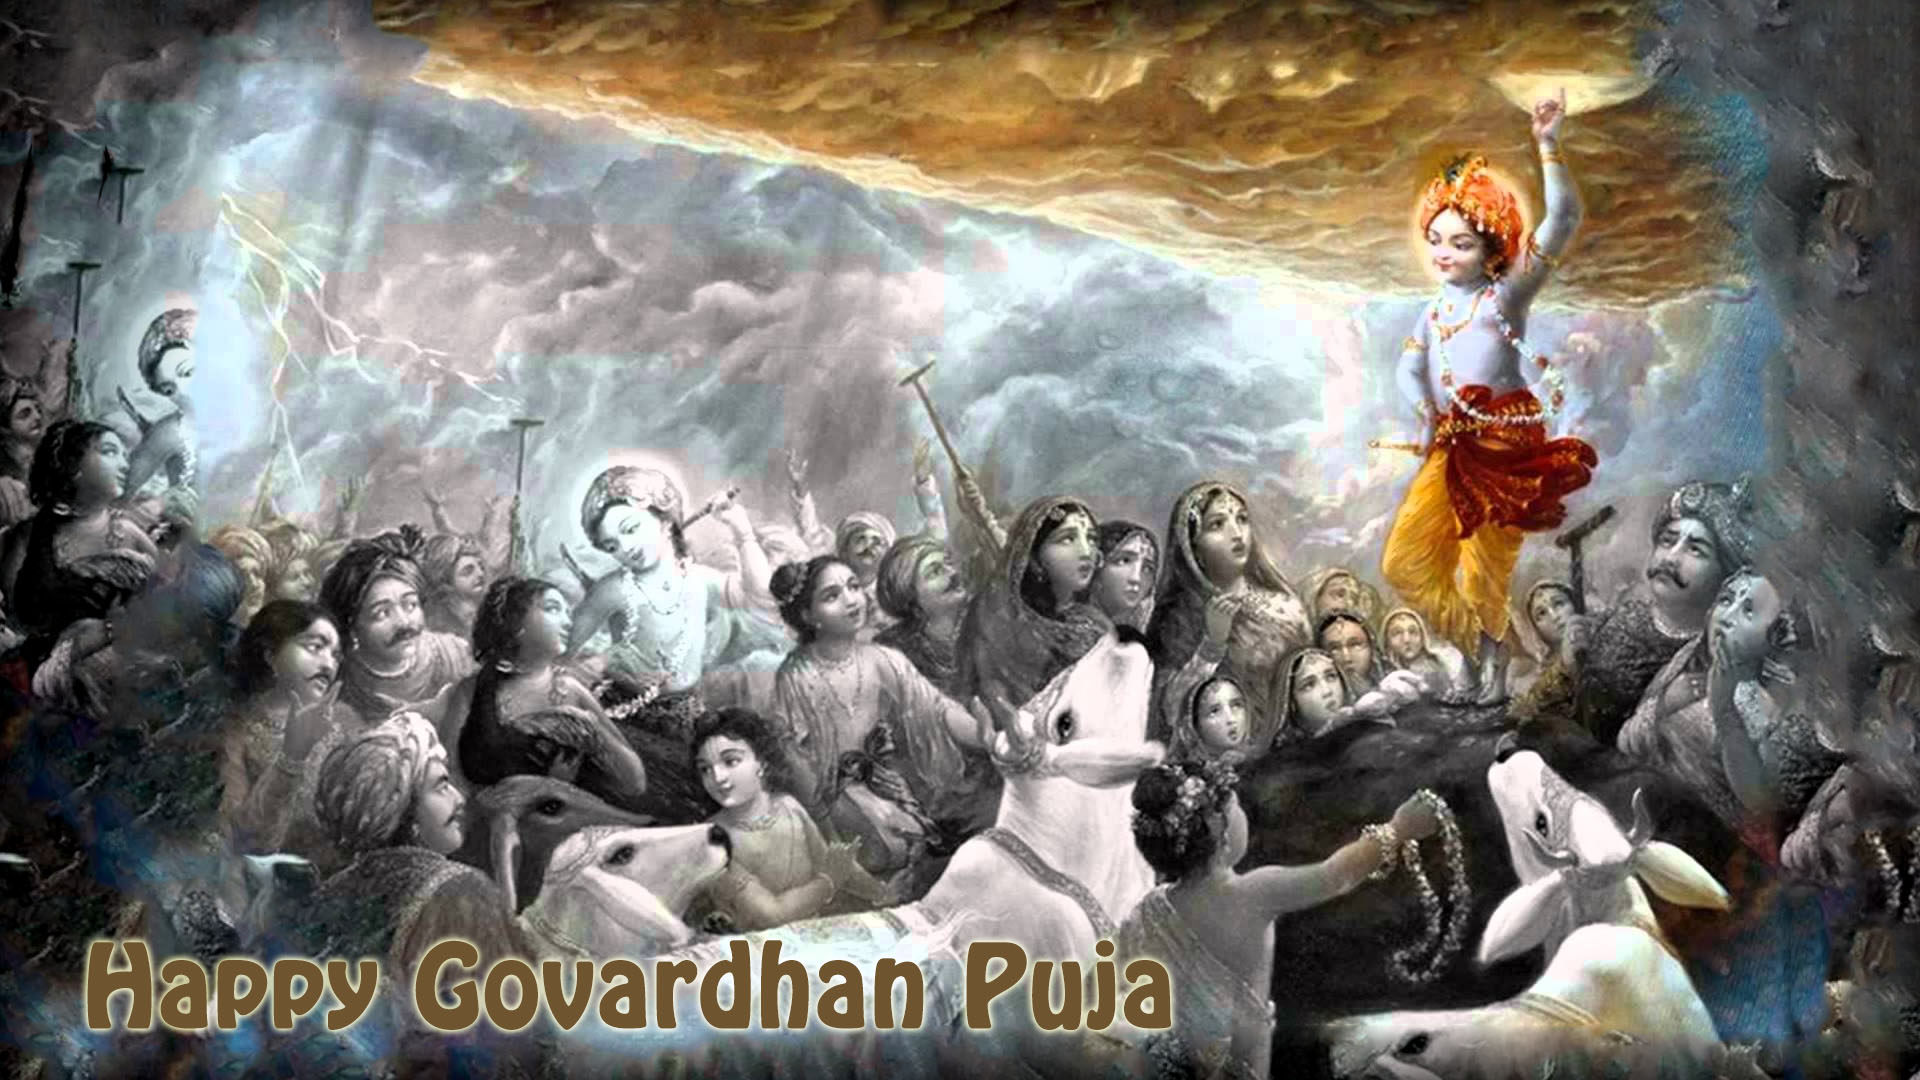 Govardhan Puja Image Wallpaper